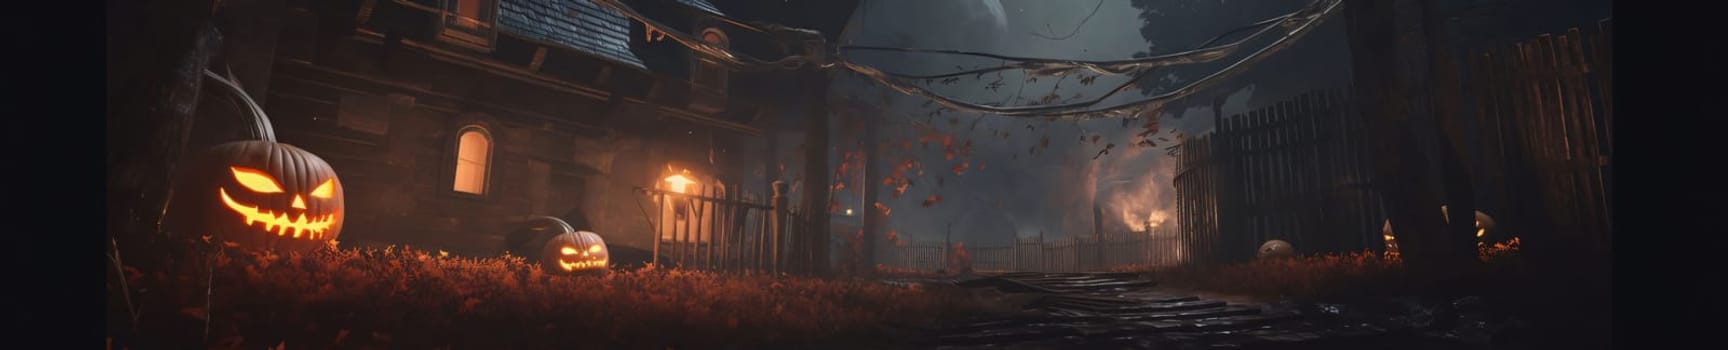 Banner: Halloween background with pumpkins in the dark. 3d rendering